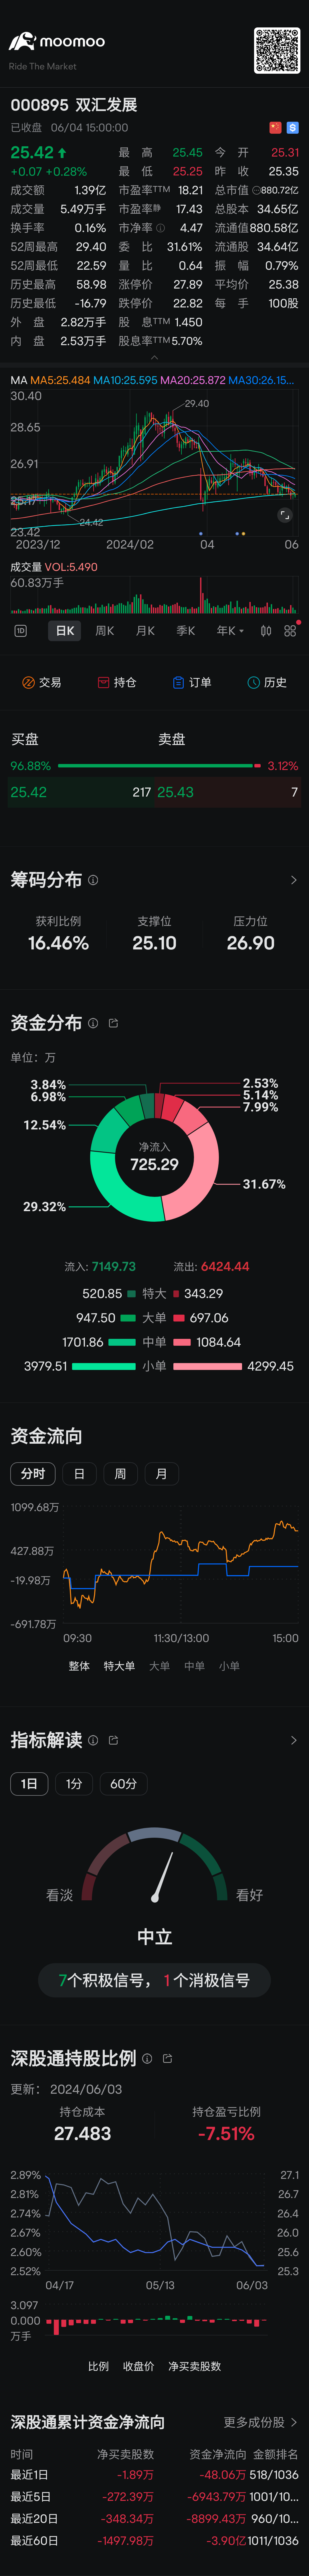 $Henan Shuanghui Investment & Development (000895.SZ)$ What's up again